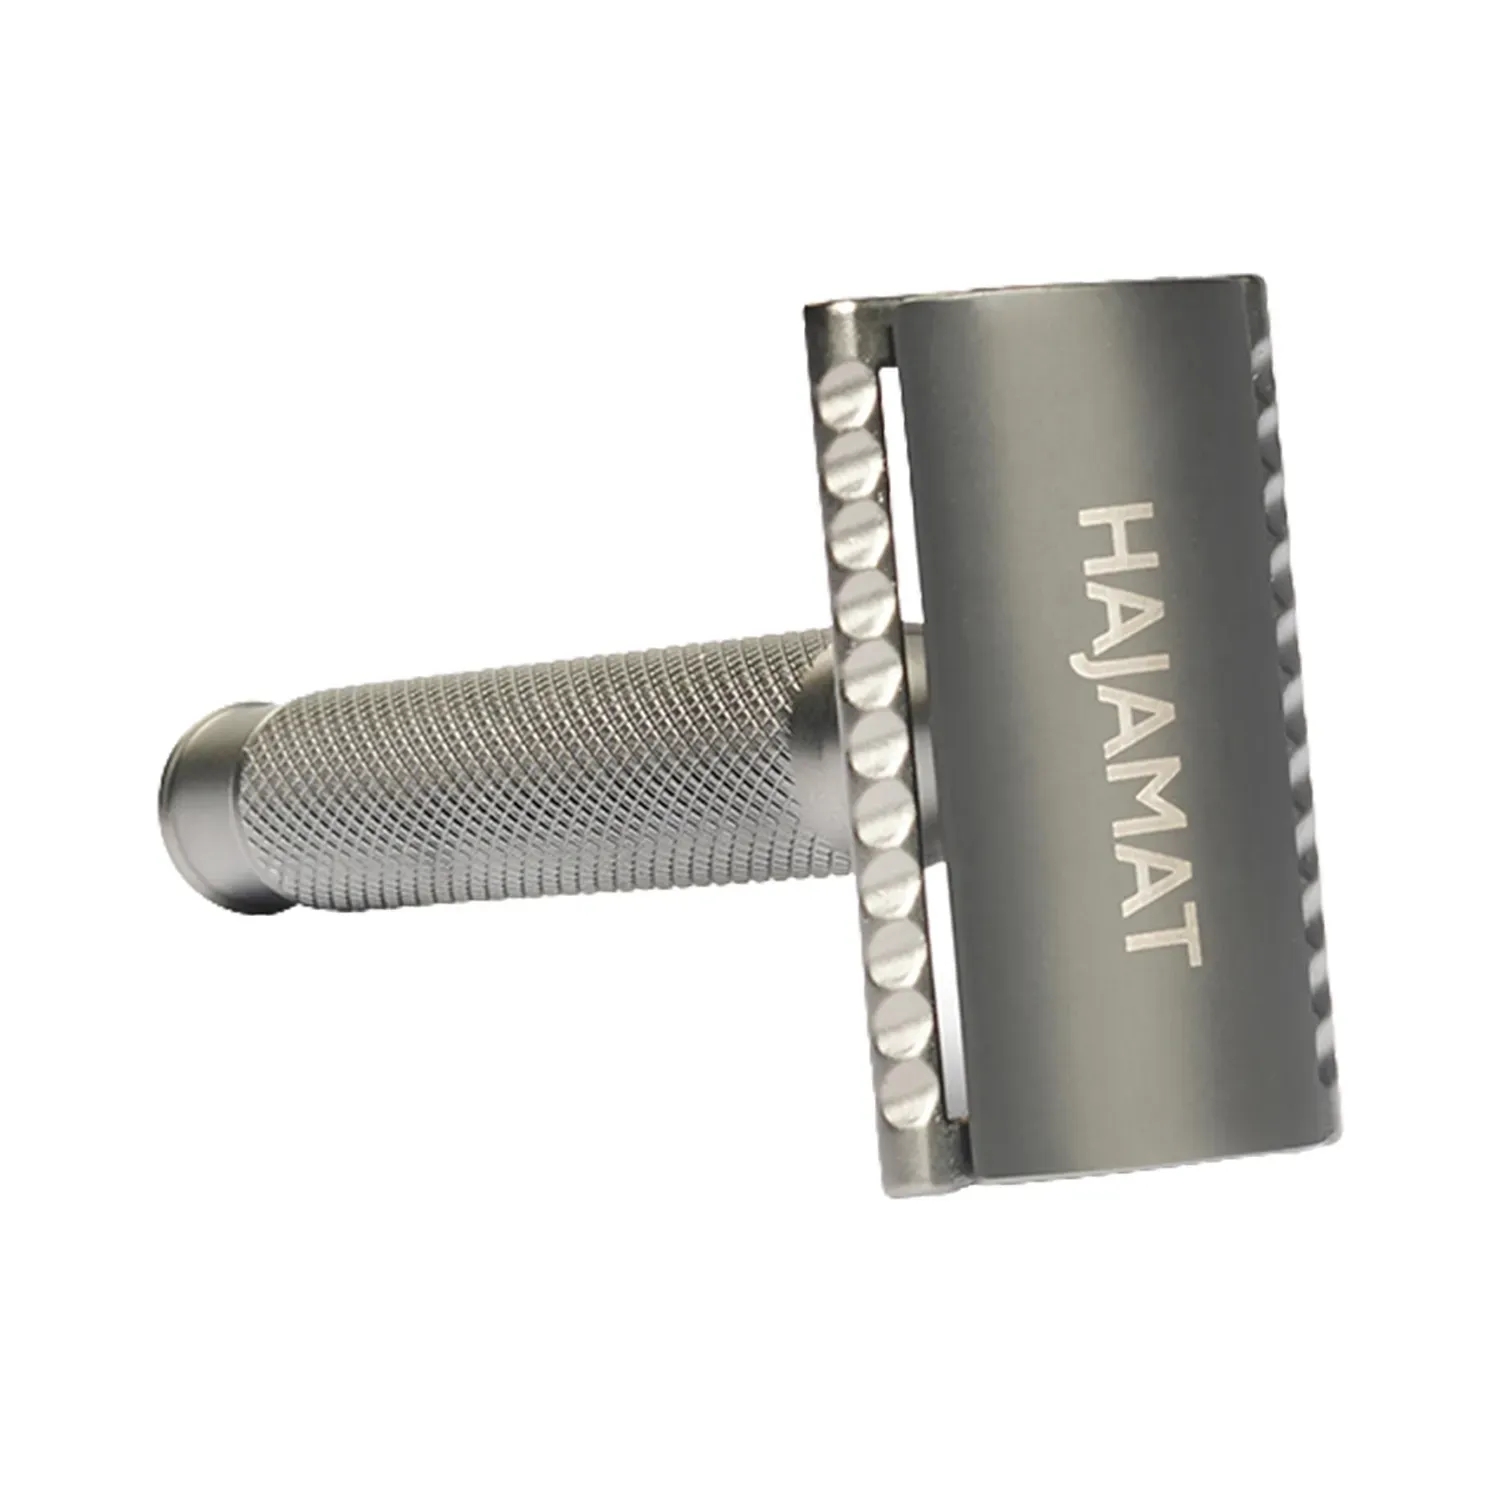 Hajamat Scythe Double Edge Safety Razor, Stainless Steel 304, Gunmetal Finish